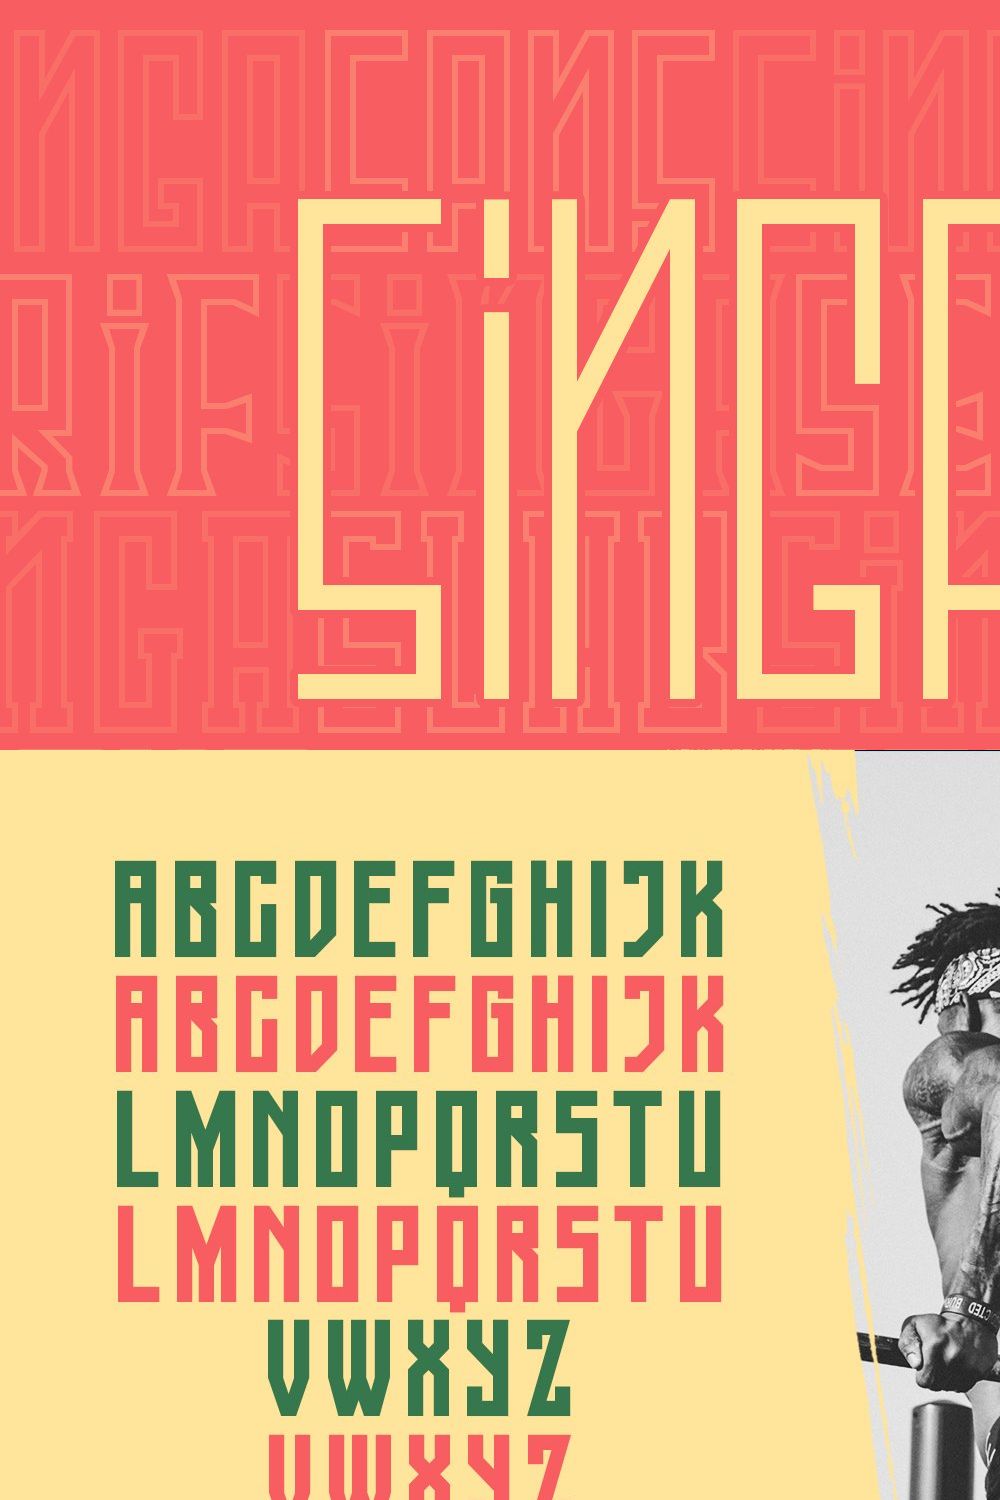 Singa - Family Font pinterest preview image.